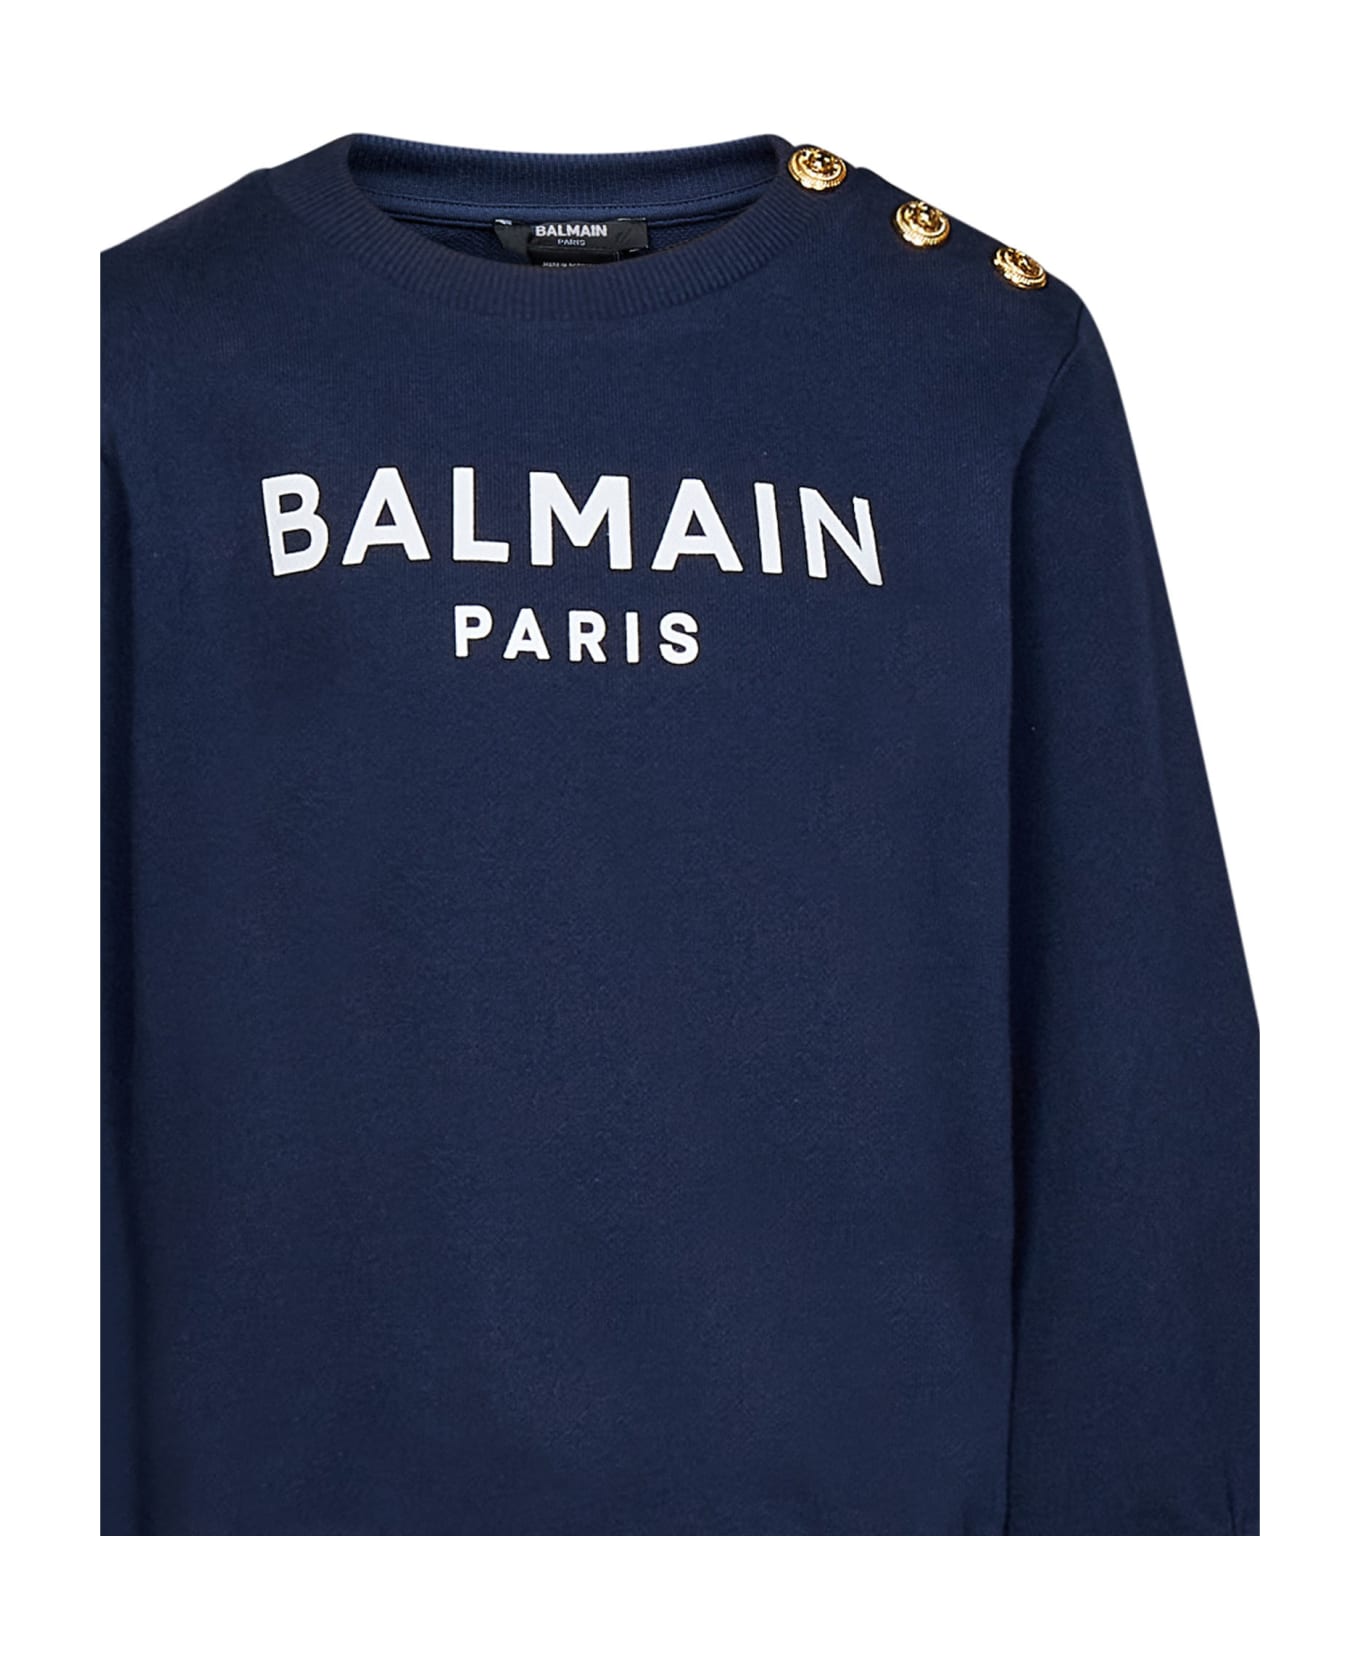 Balmain Paris Kids Sweatshirt - Blue